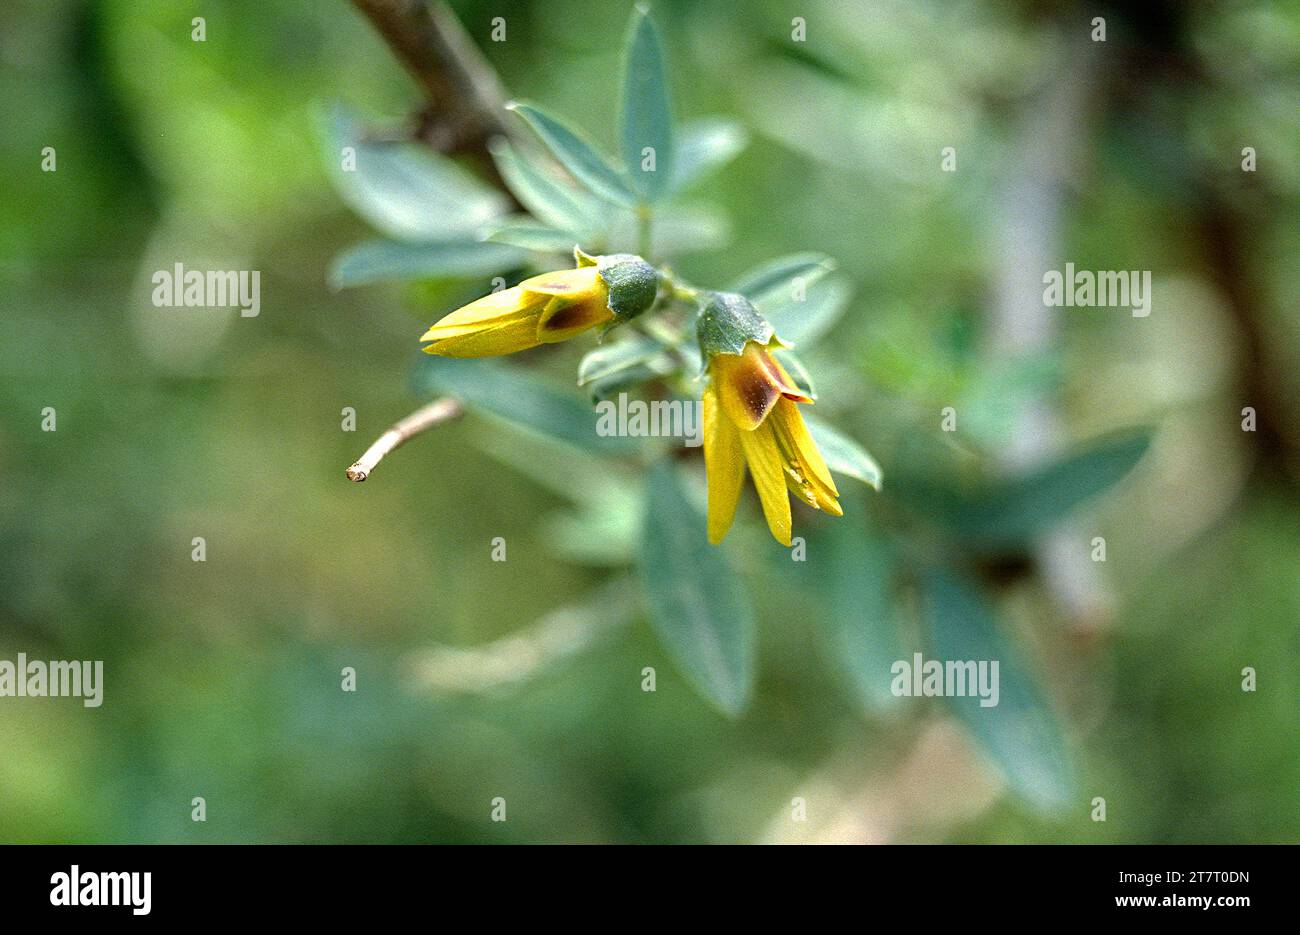 Altramuz del diablo (Anagyris foetida) is a deciduous shrub toxic and medicinal native to Mediterranean basin. Flowers detail. Stock Photo